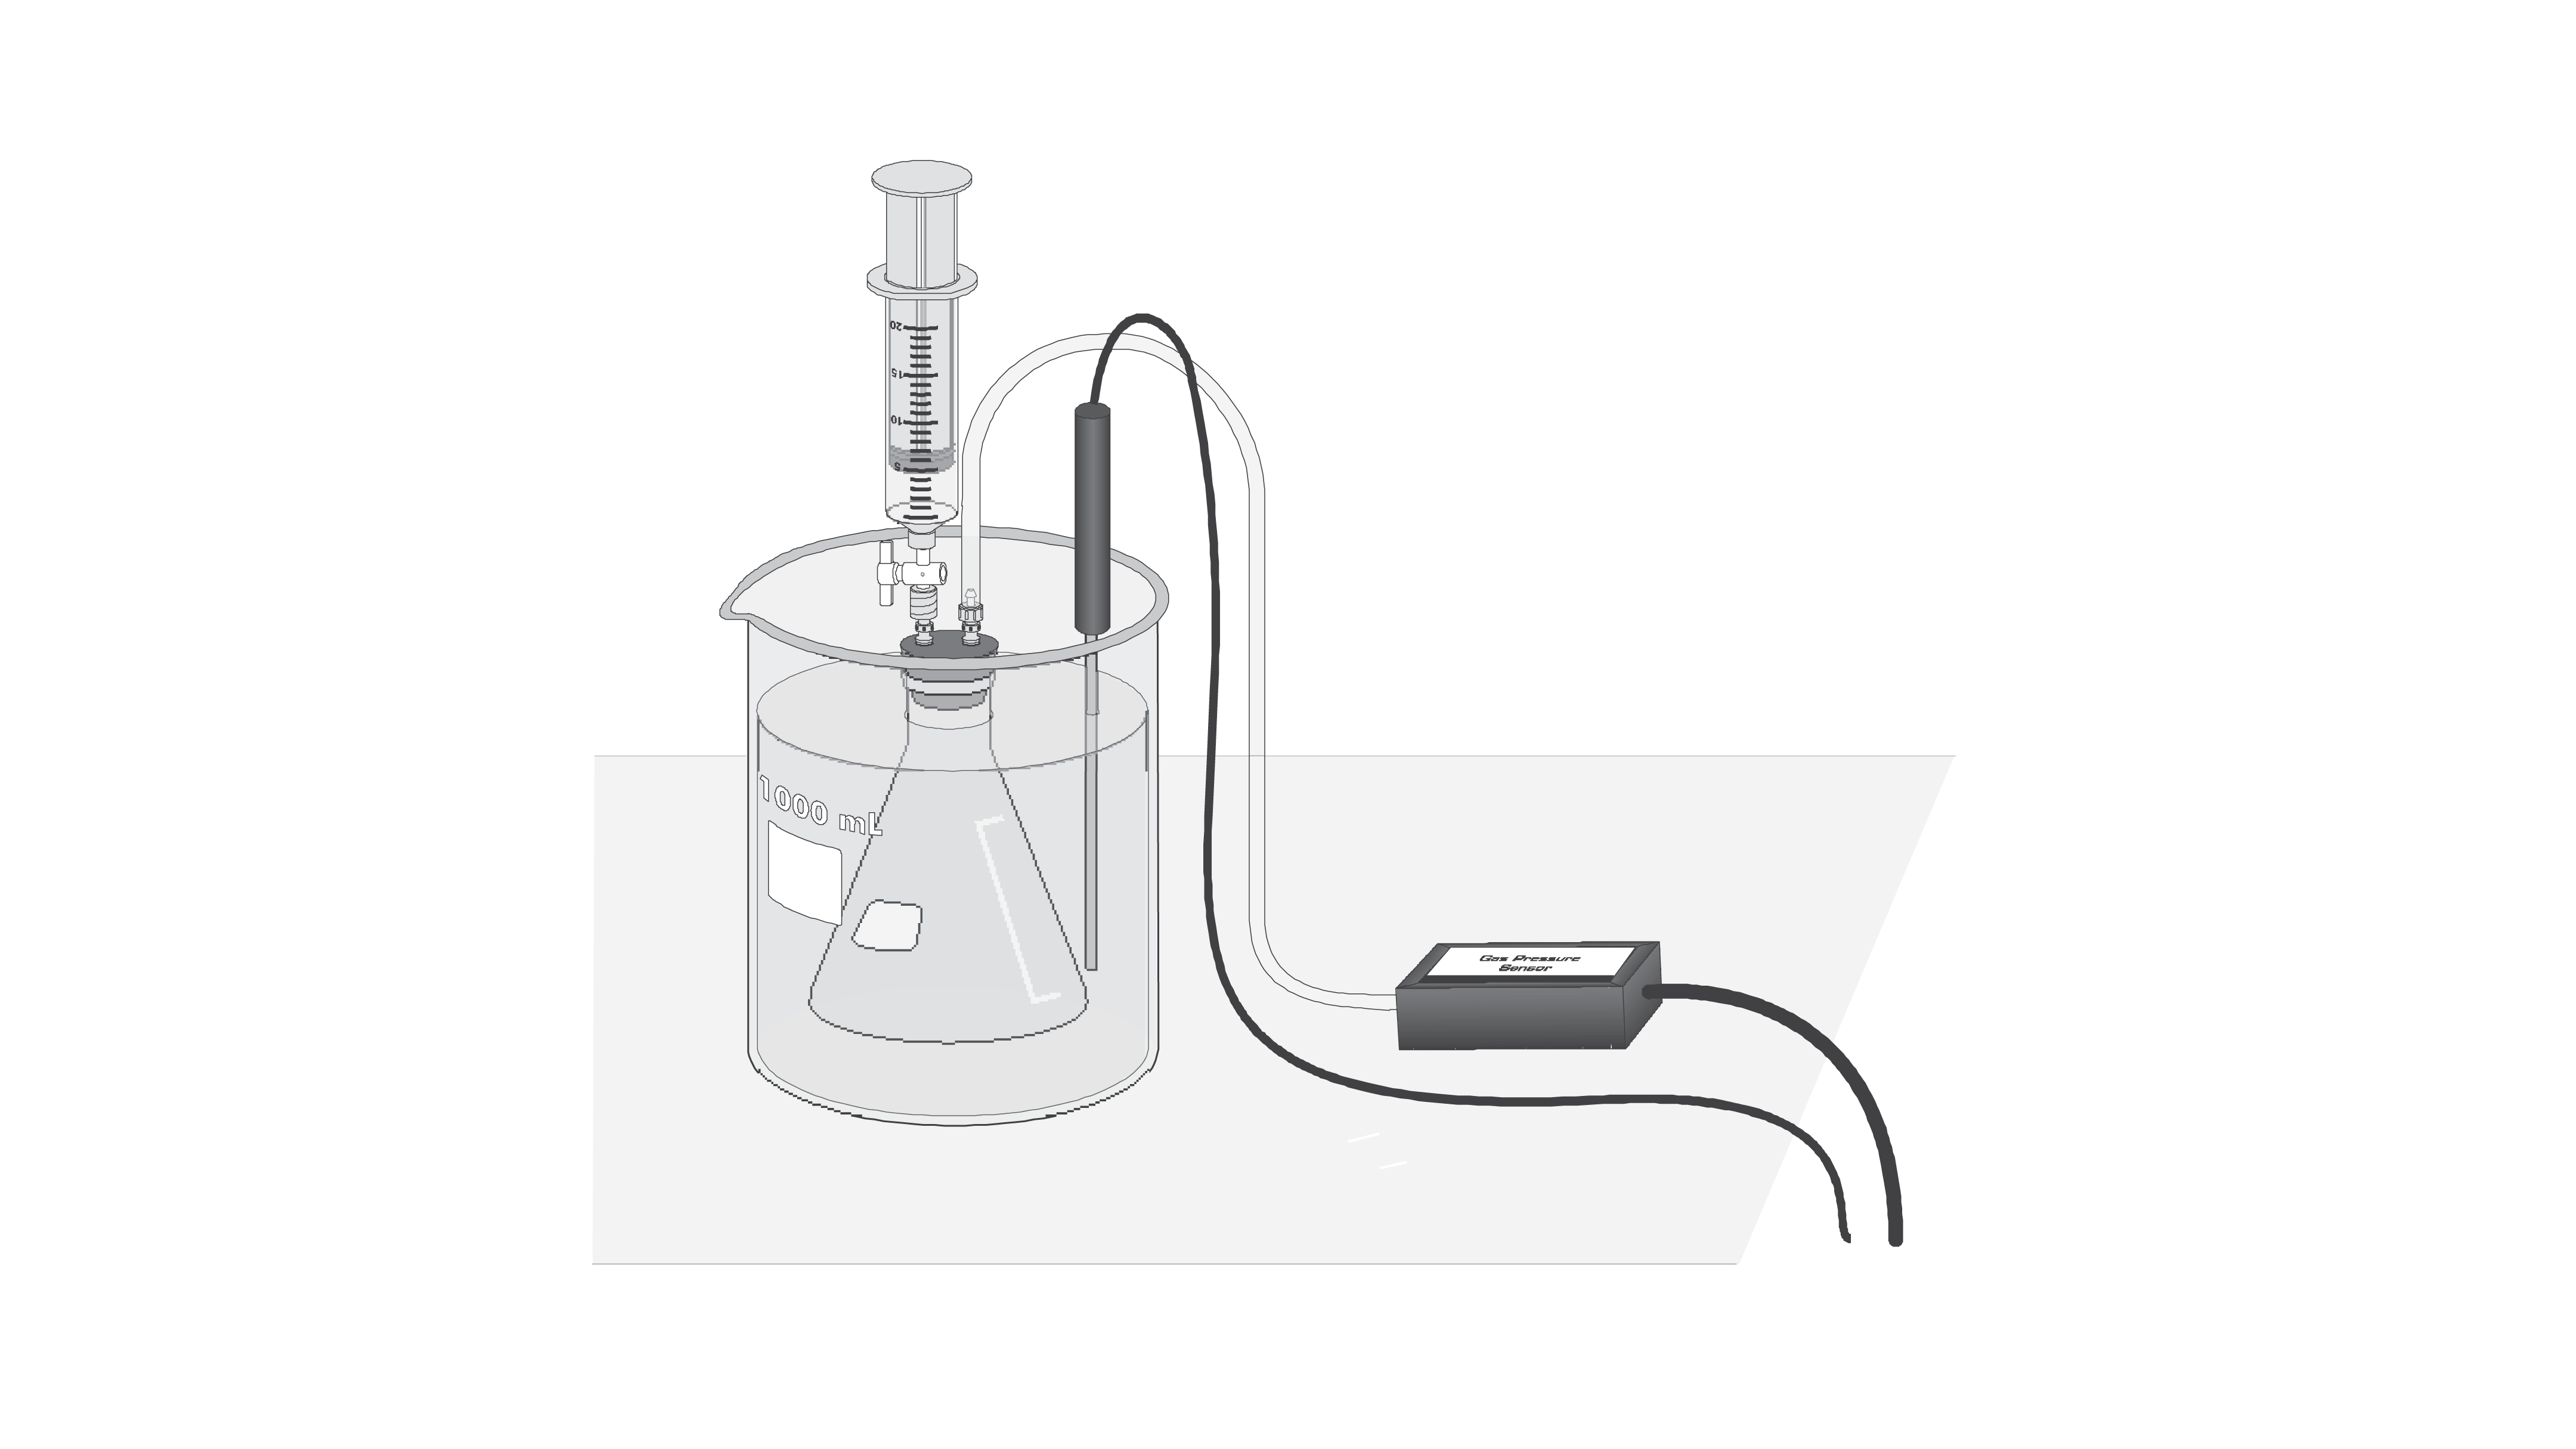 vapor pressure and heat of vaporization lab